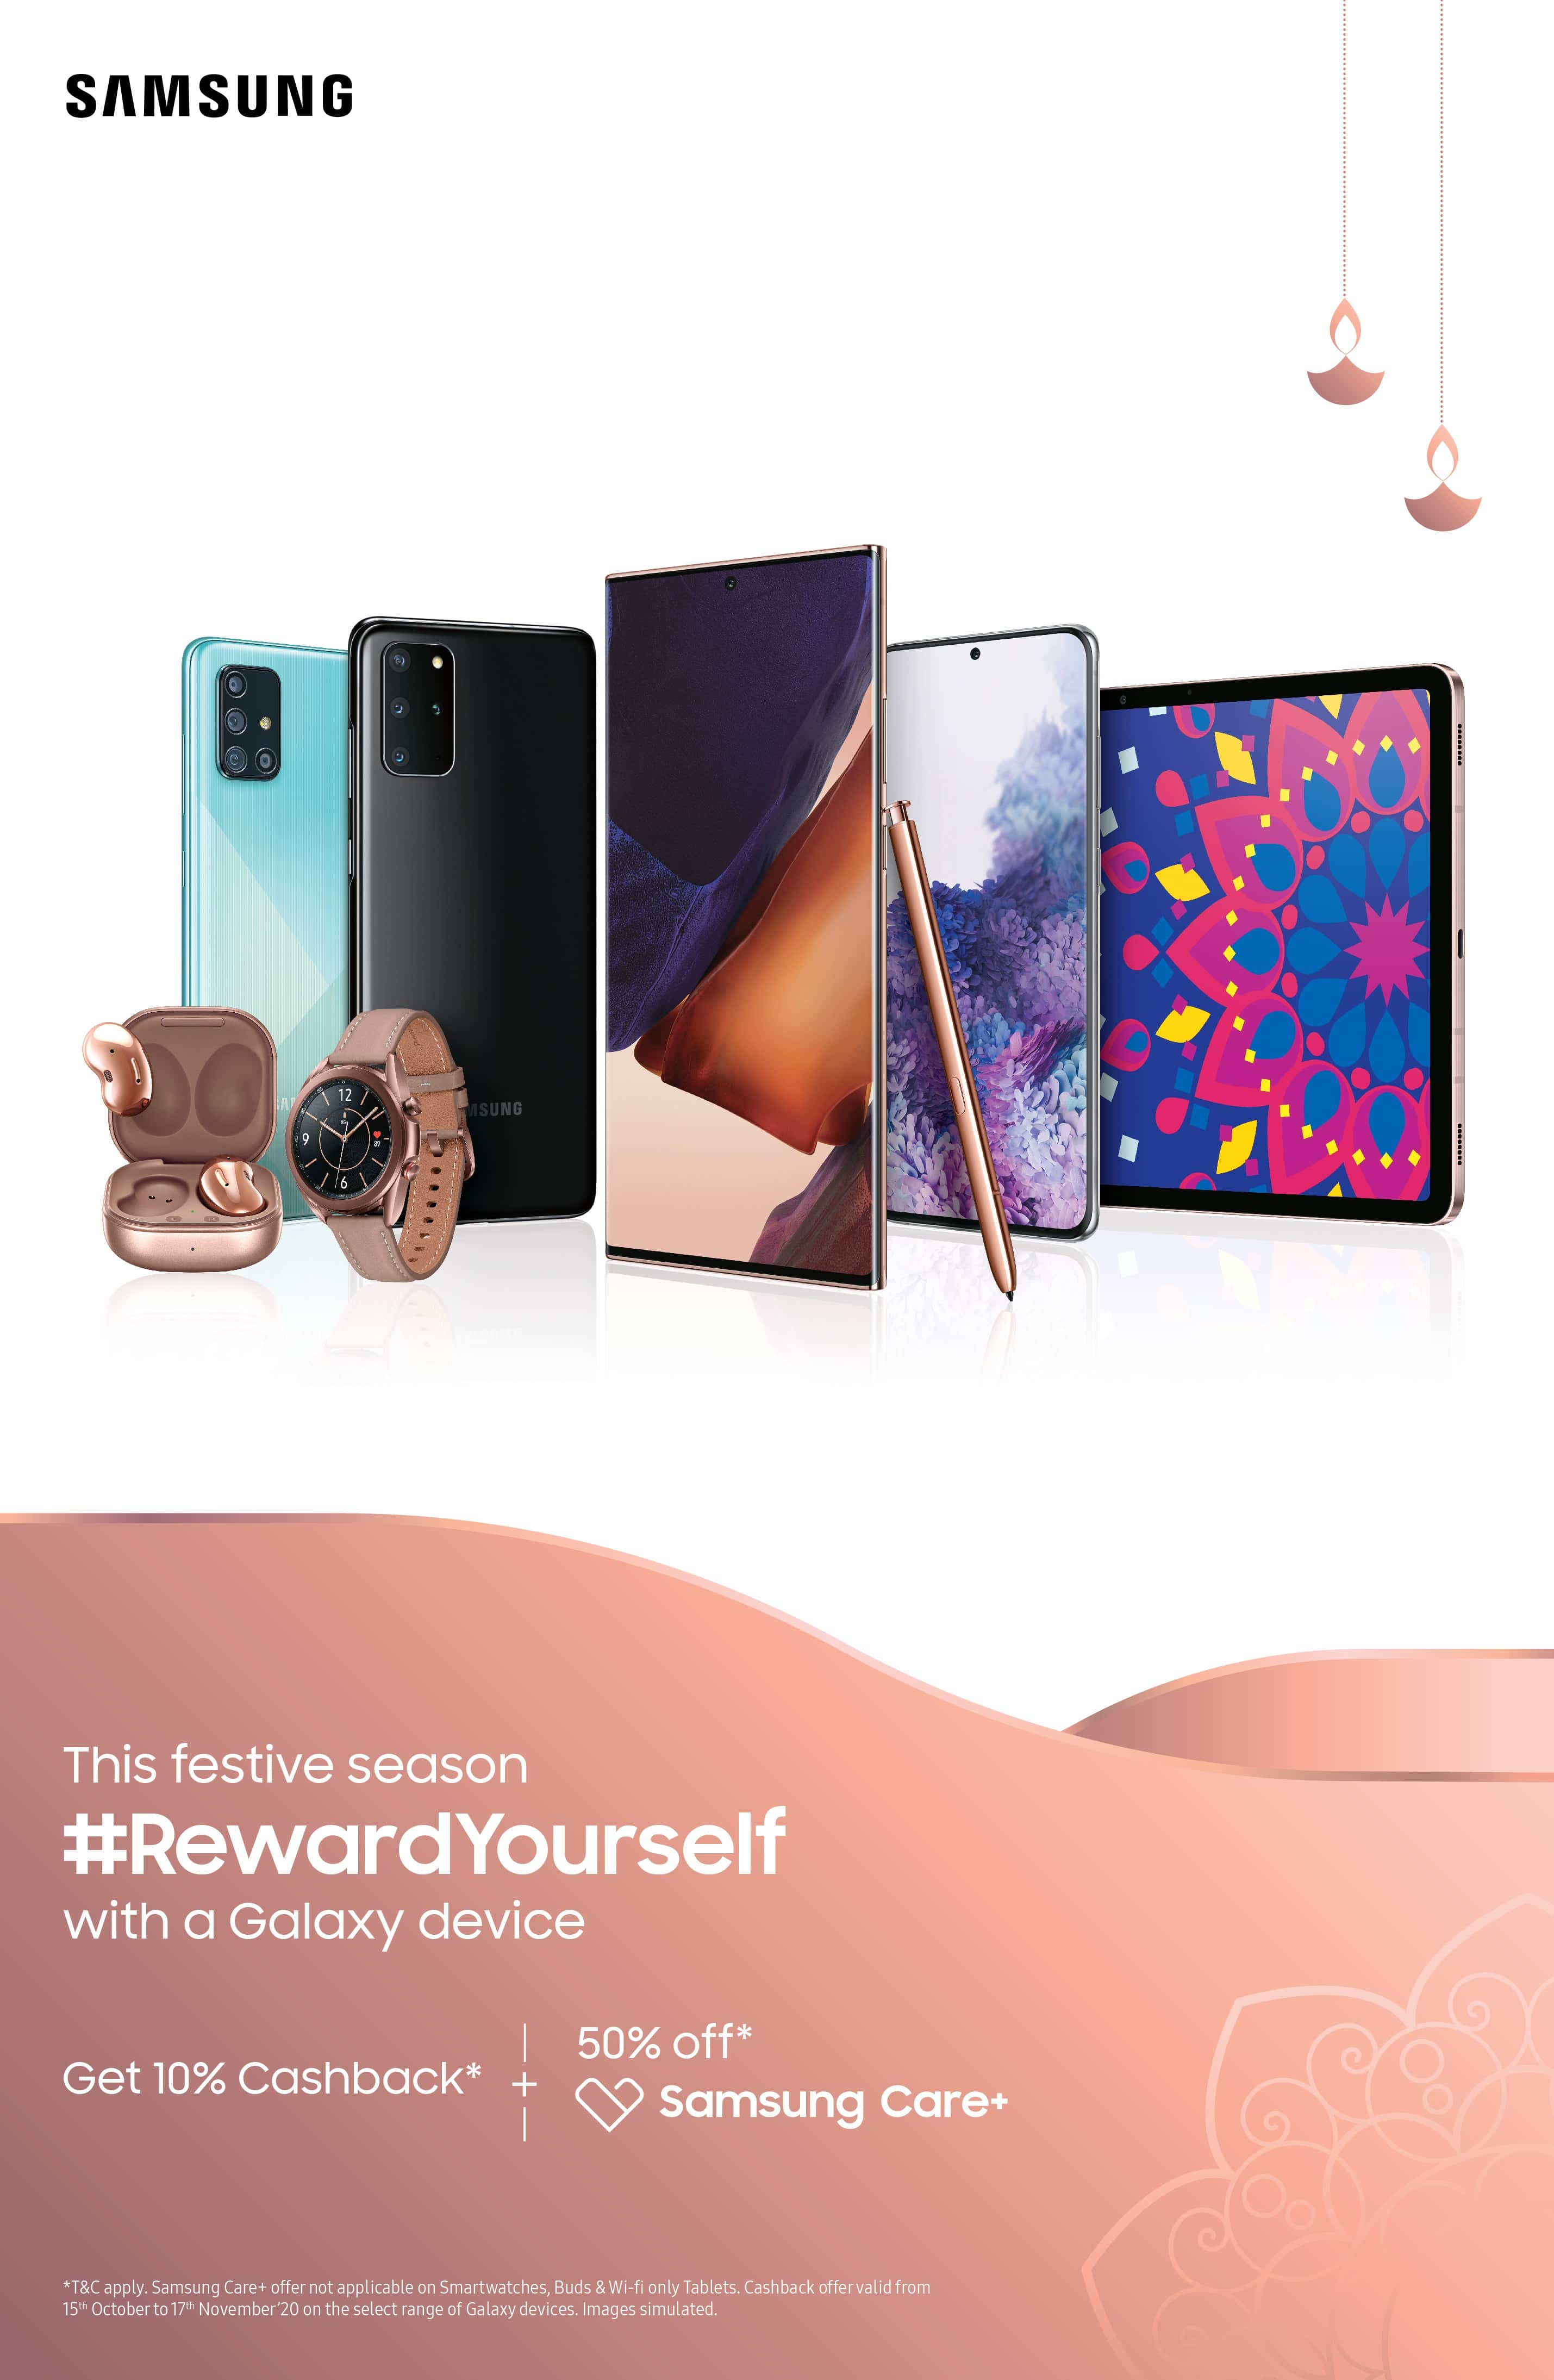 Samsung ‘Reward Yourself’ program: 10 pct discount on purchase via